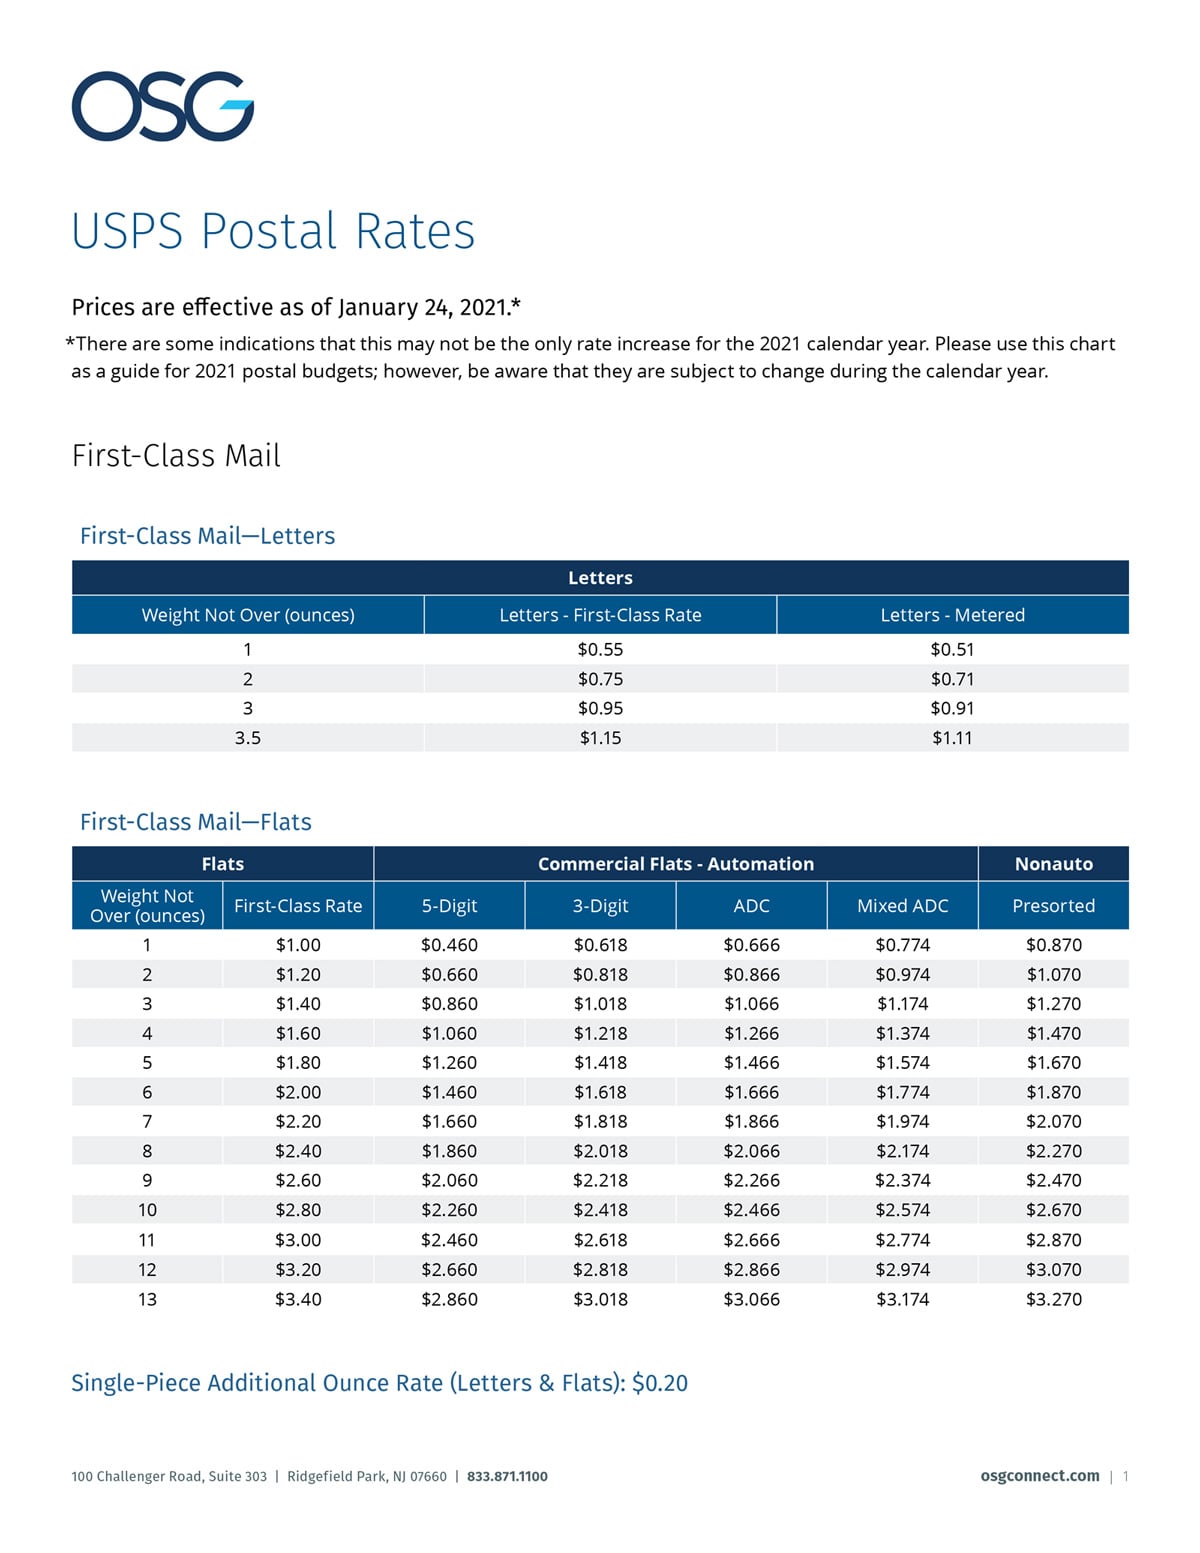 OSG Postal Rates Charts